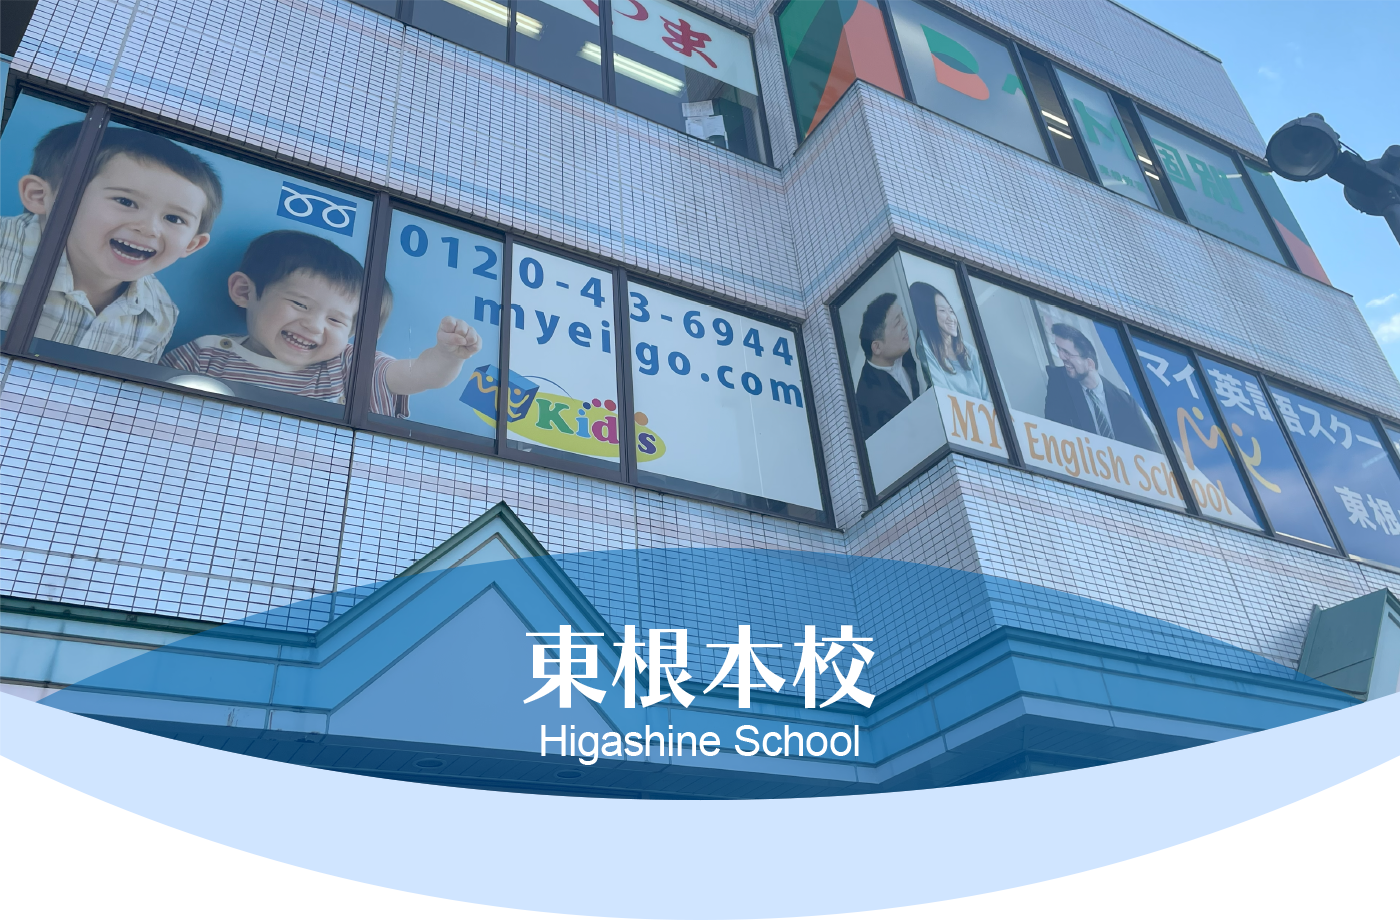 東根本校 School Information